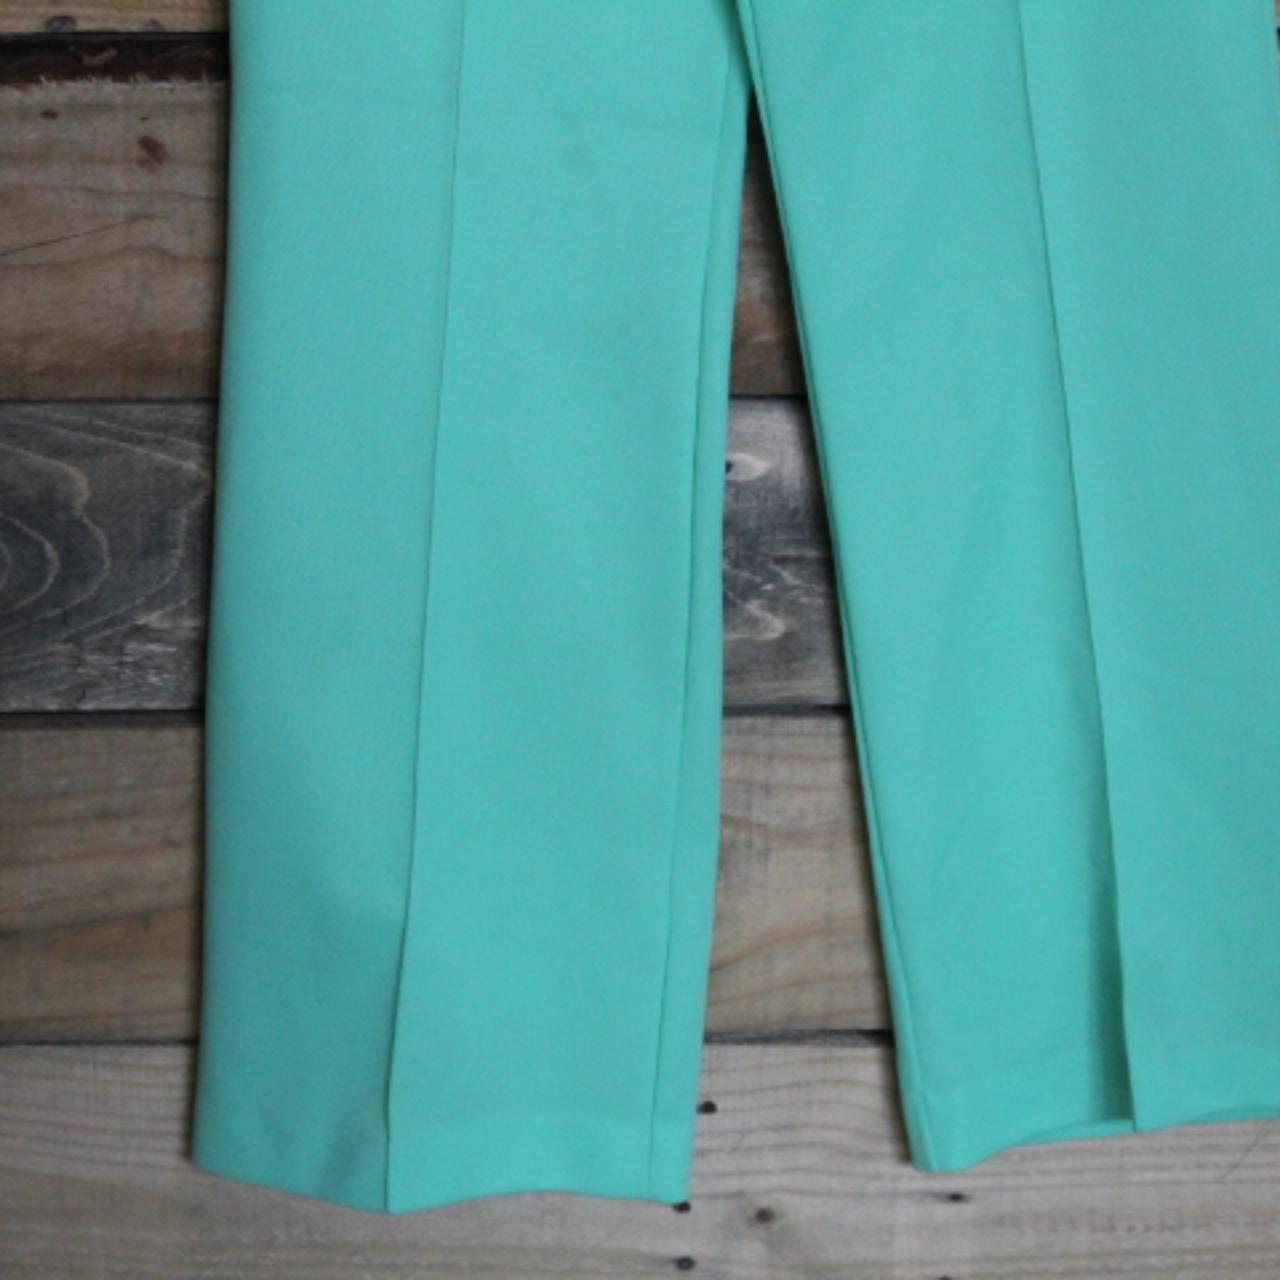 Green Pants - Satin Plisse Pants - High-Waisted Pants - Lulus